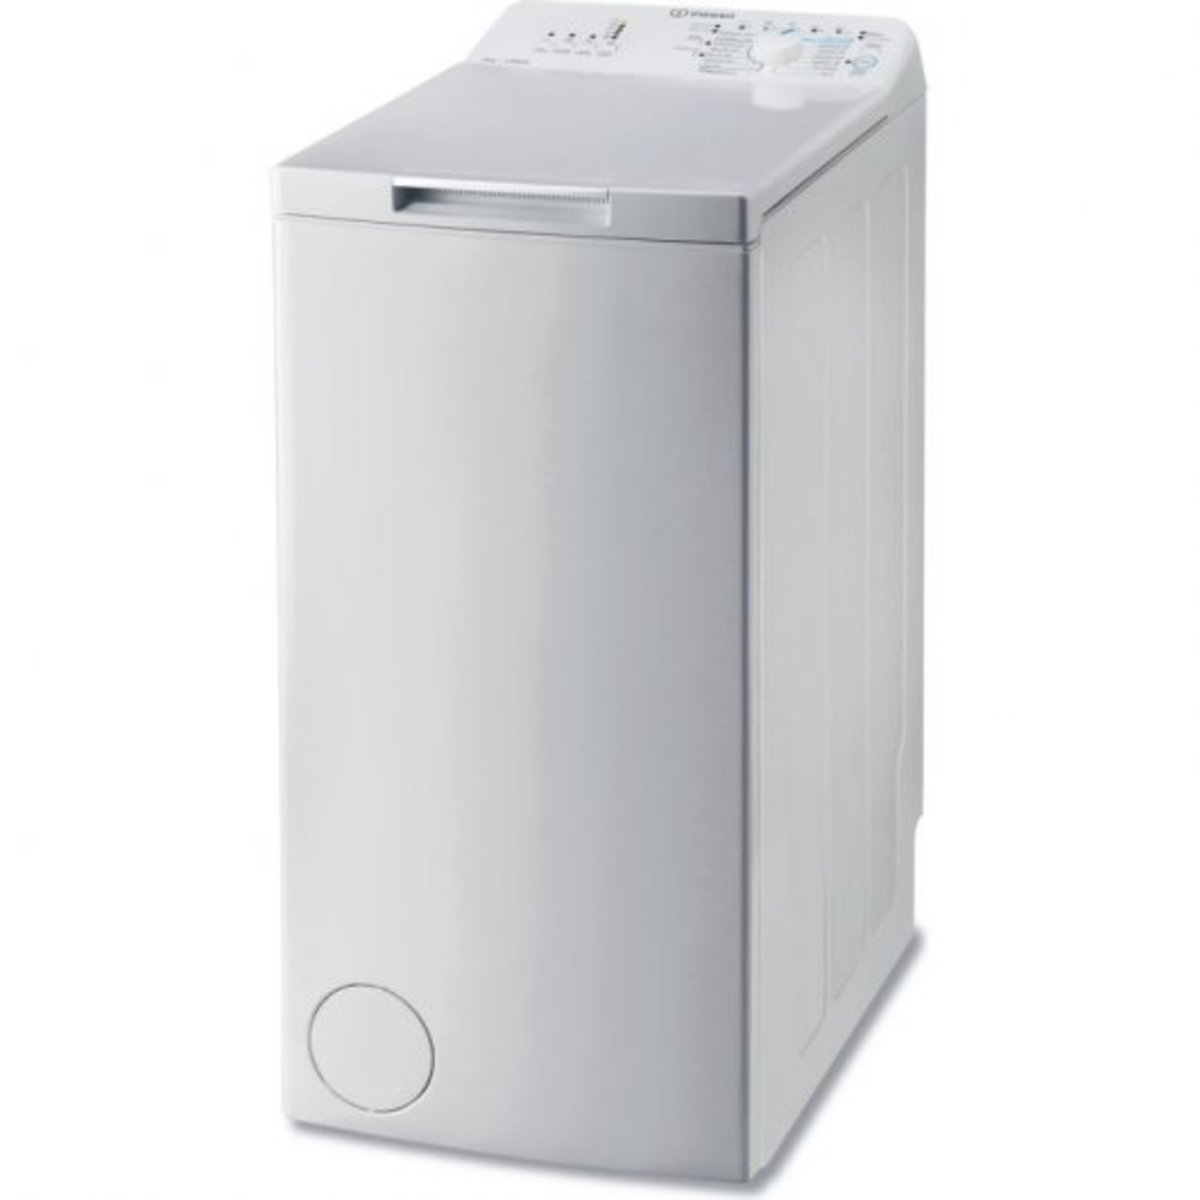 Lavadora - Indesit BTWL60300SPN lavadora carga superior Lavadoras INDESIT, 6 kg, Blanco